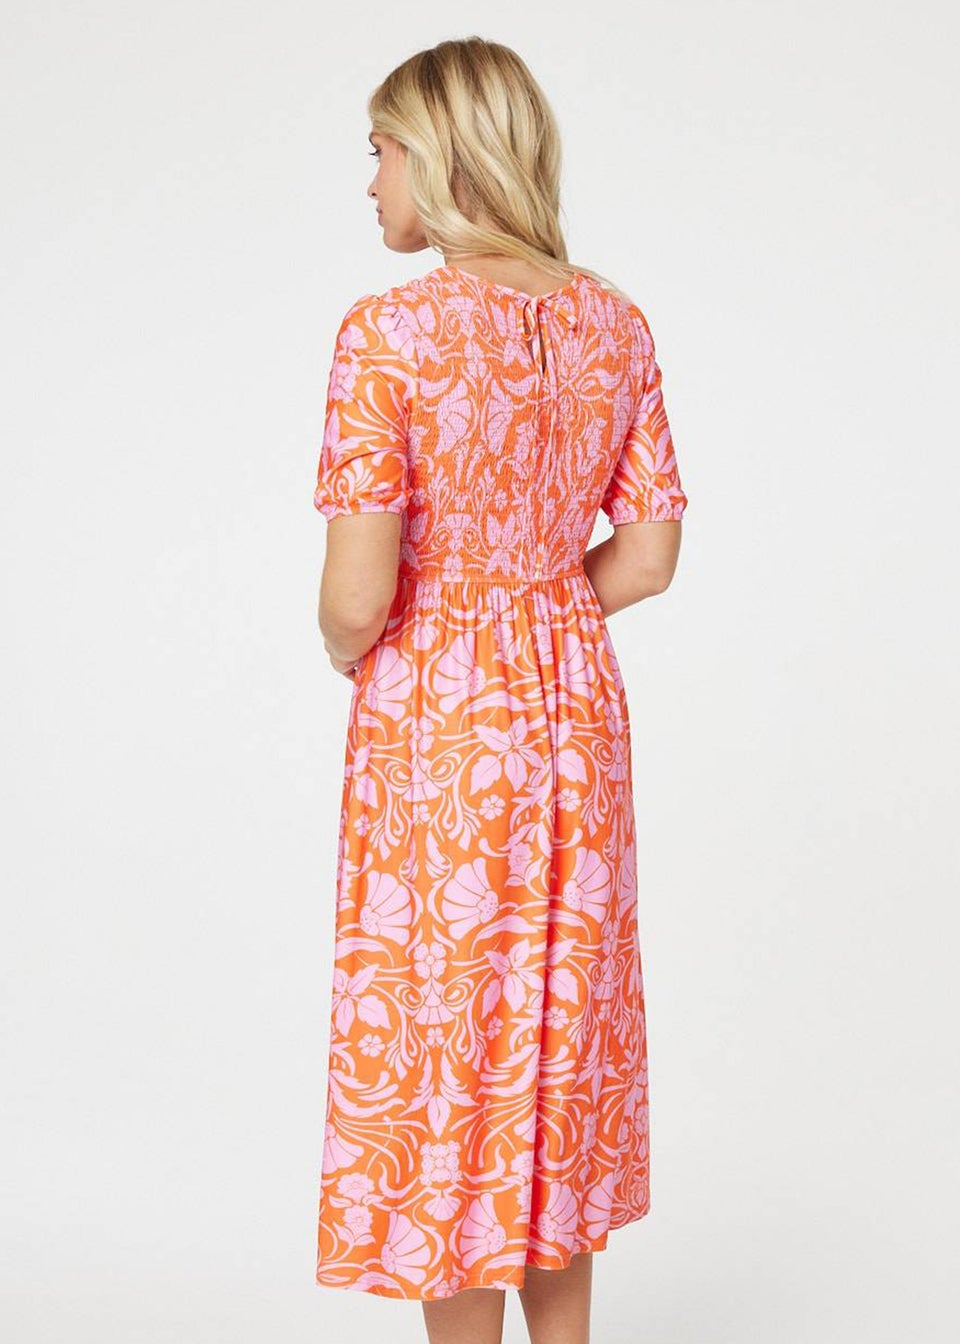 Izabel London Orange Floral Smocked Detail Midi Dress